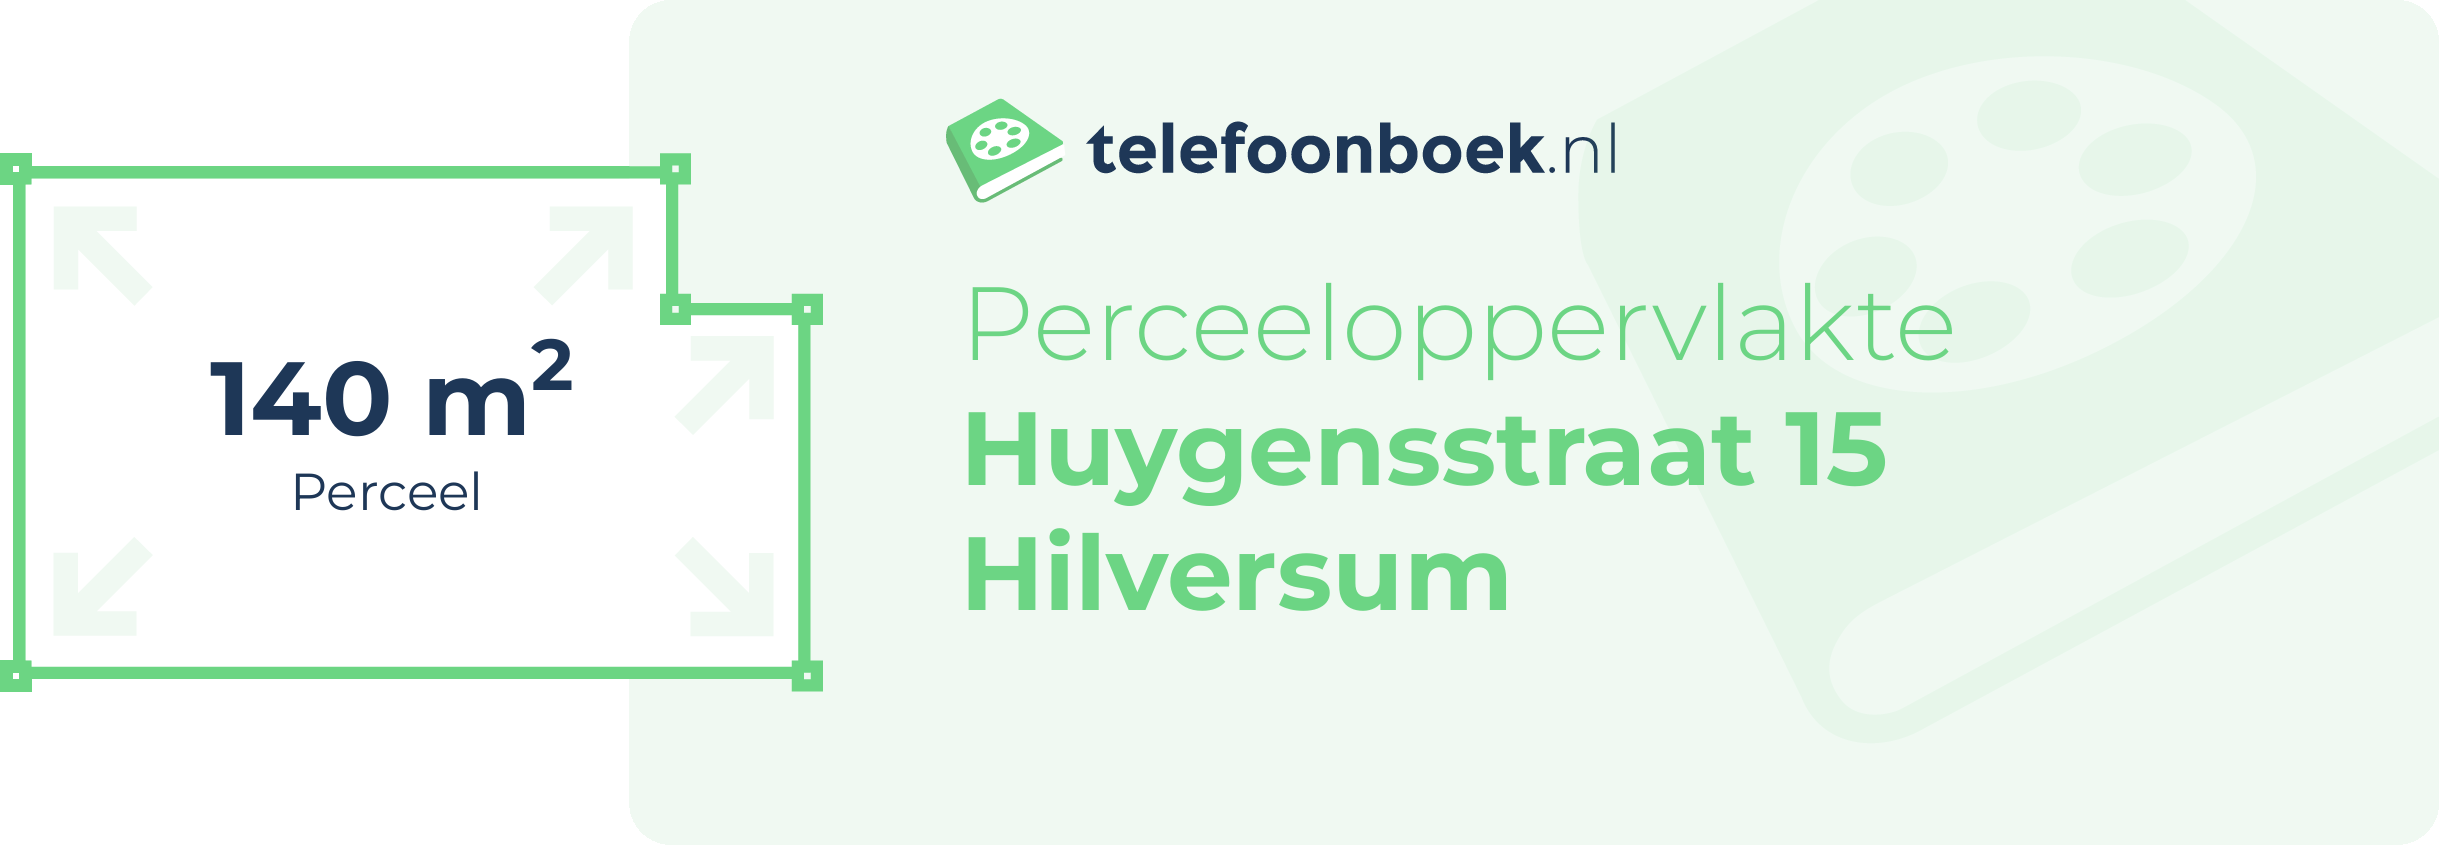 Perceeloppervlakte Huygensstraat 15 Hilversum